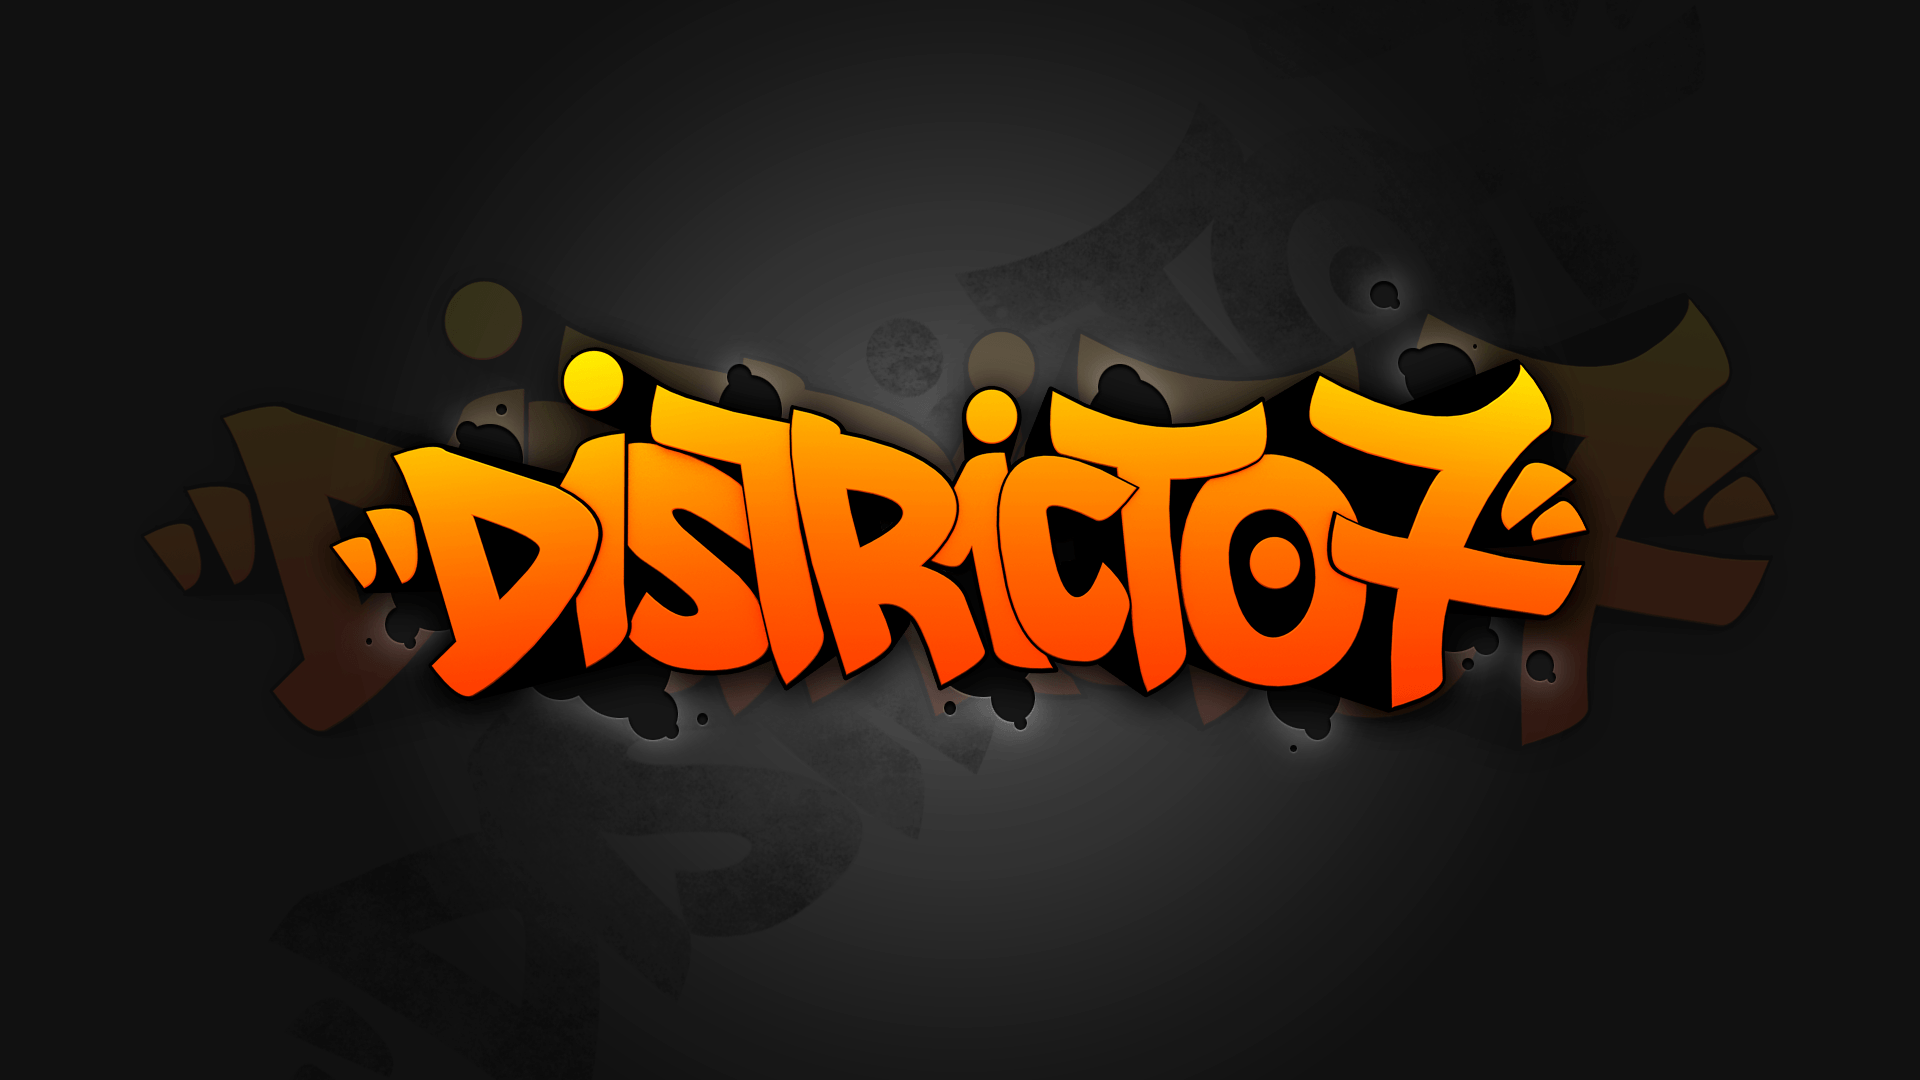 DistrictO7 Graffiti Logo